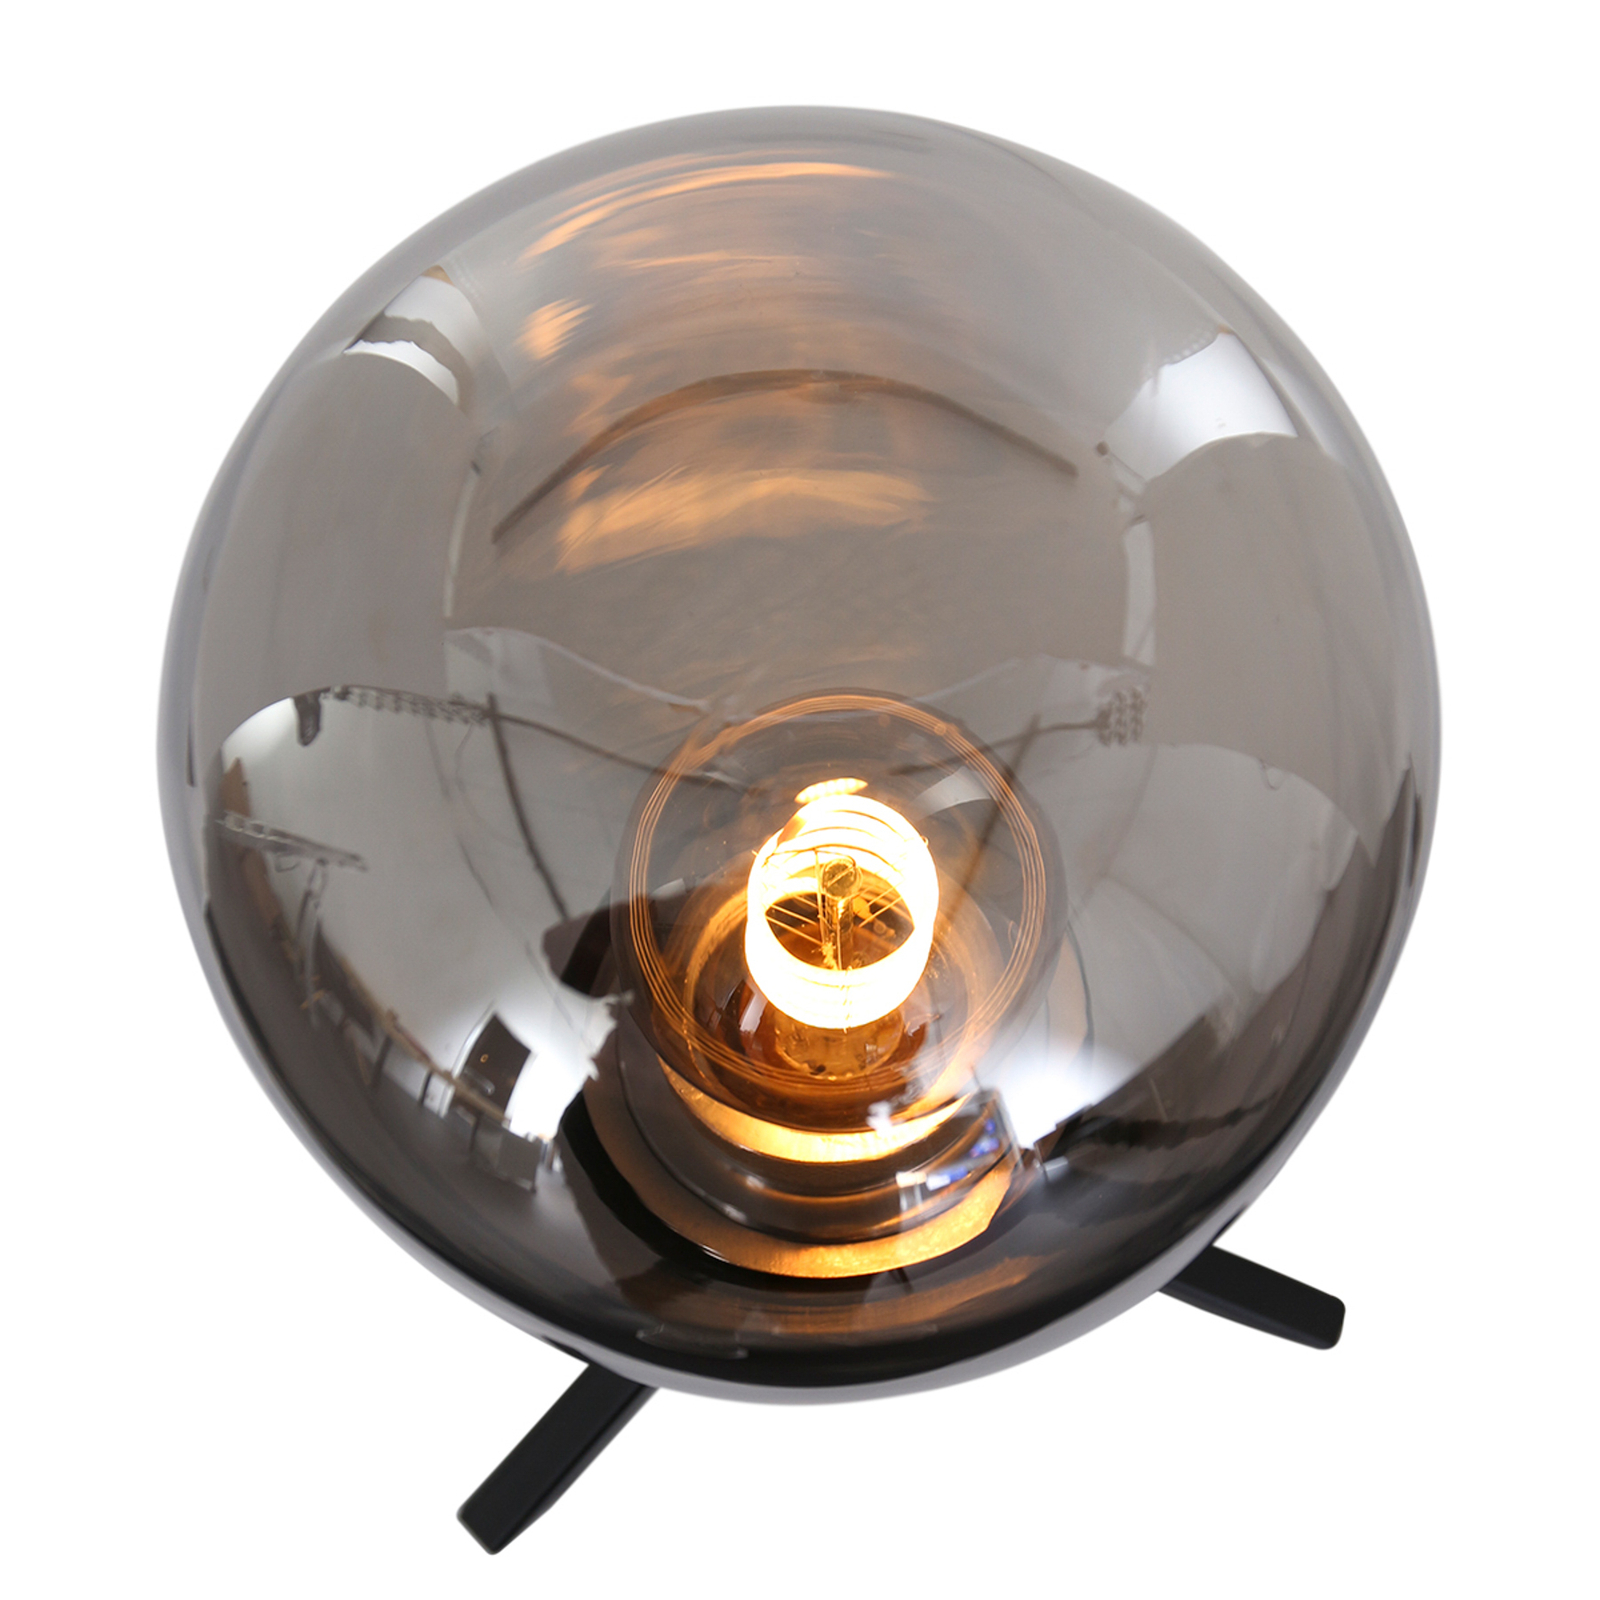 Reflexion table lamp, diameter 15 cm, height 28 cm